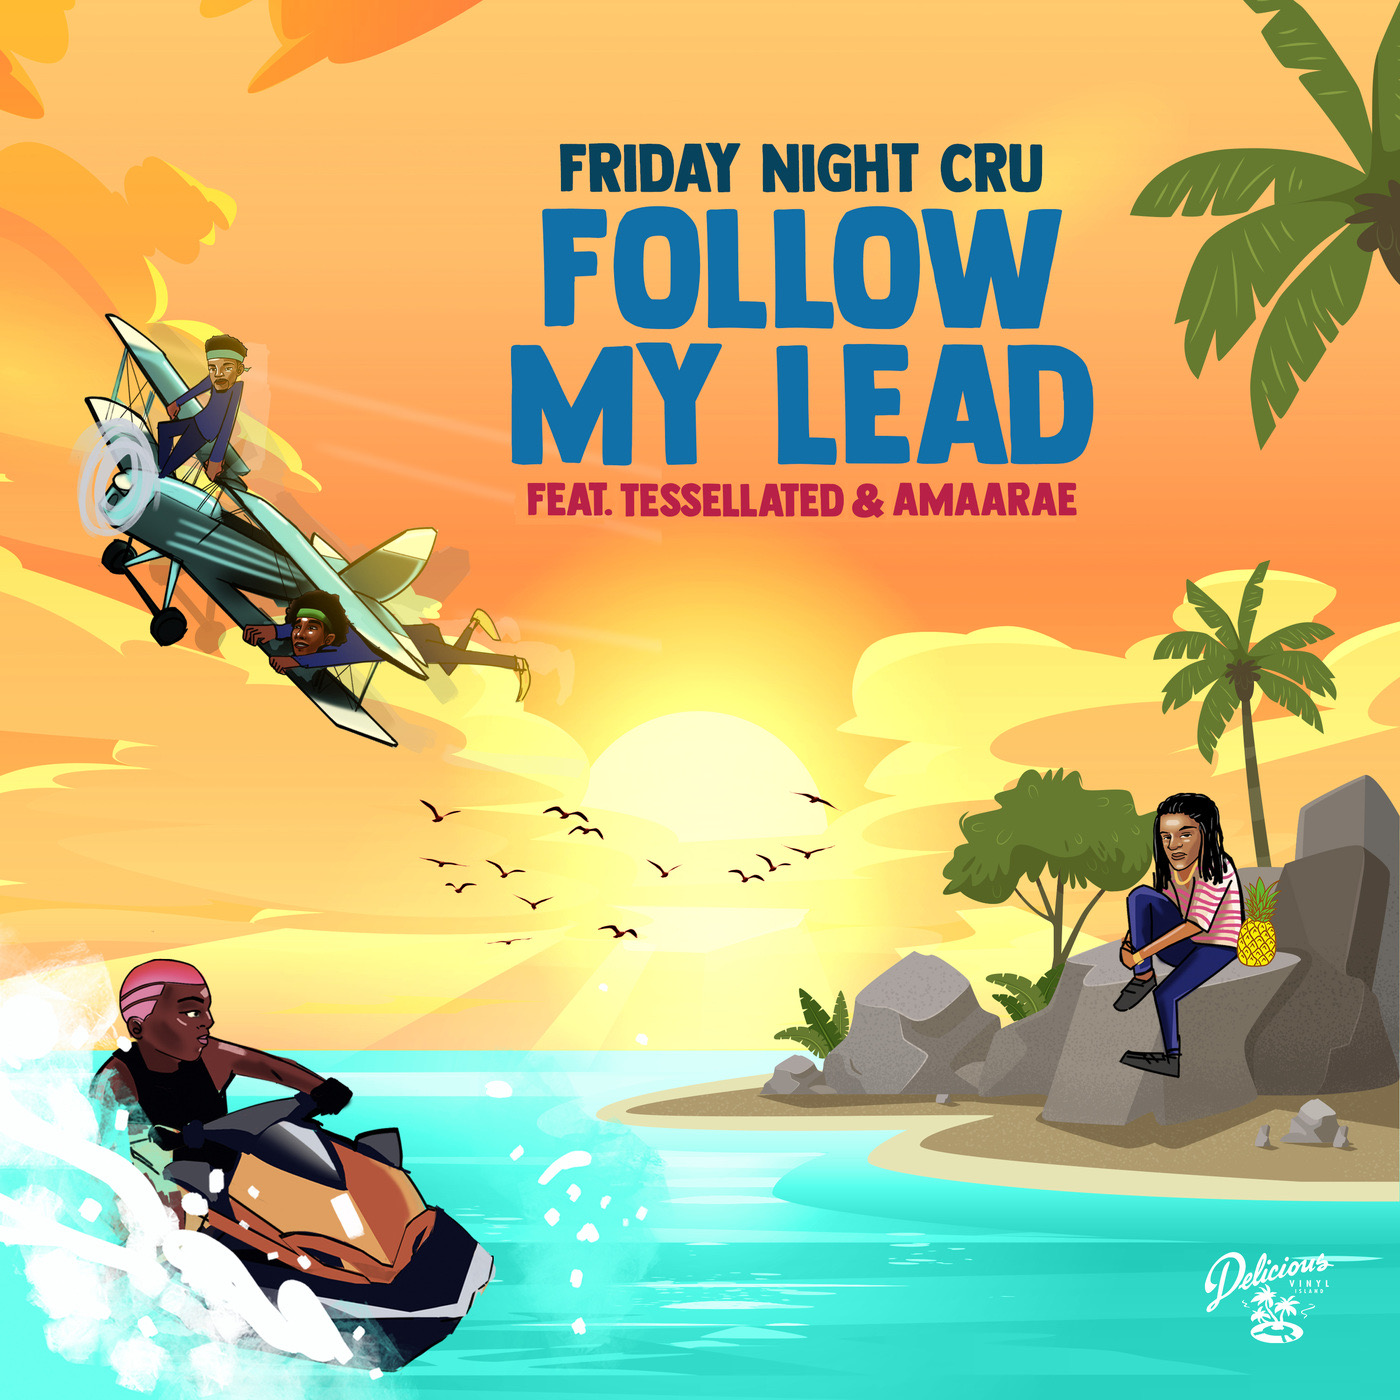 FRIDAY NIGHT CRU ft Tessellated & amaarae - Follow My Lead